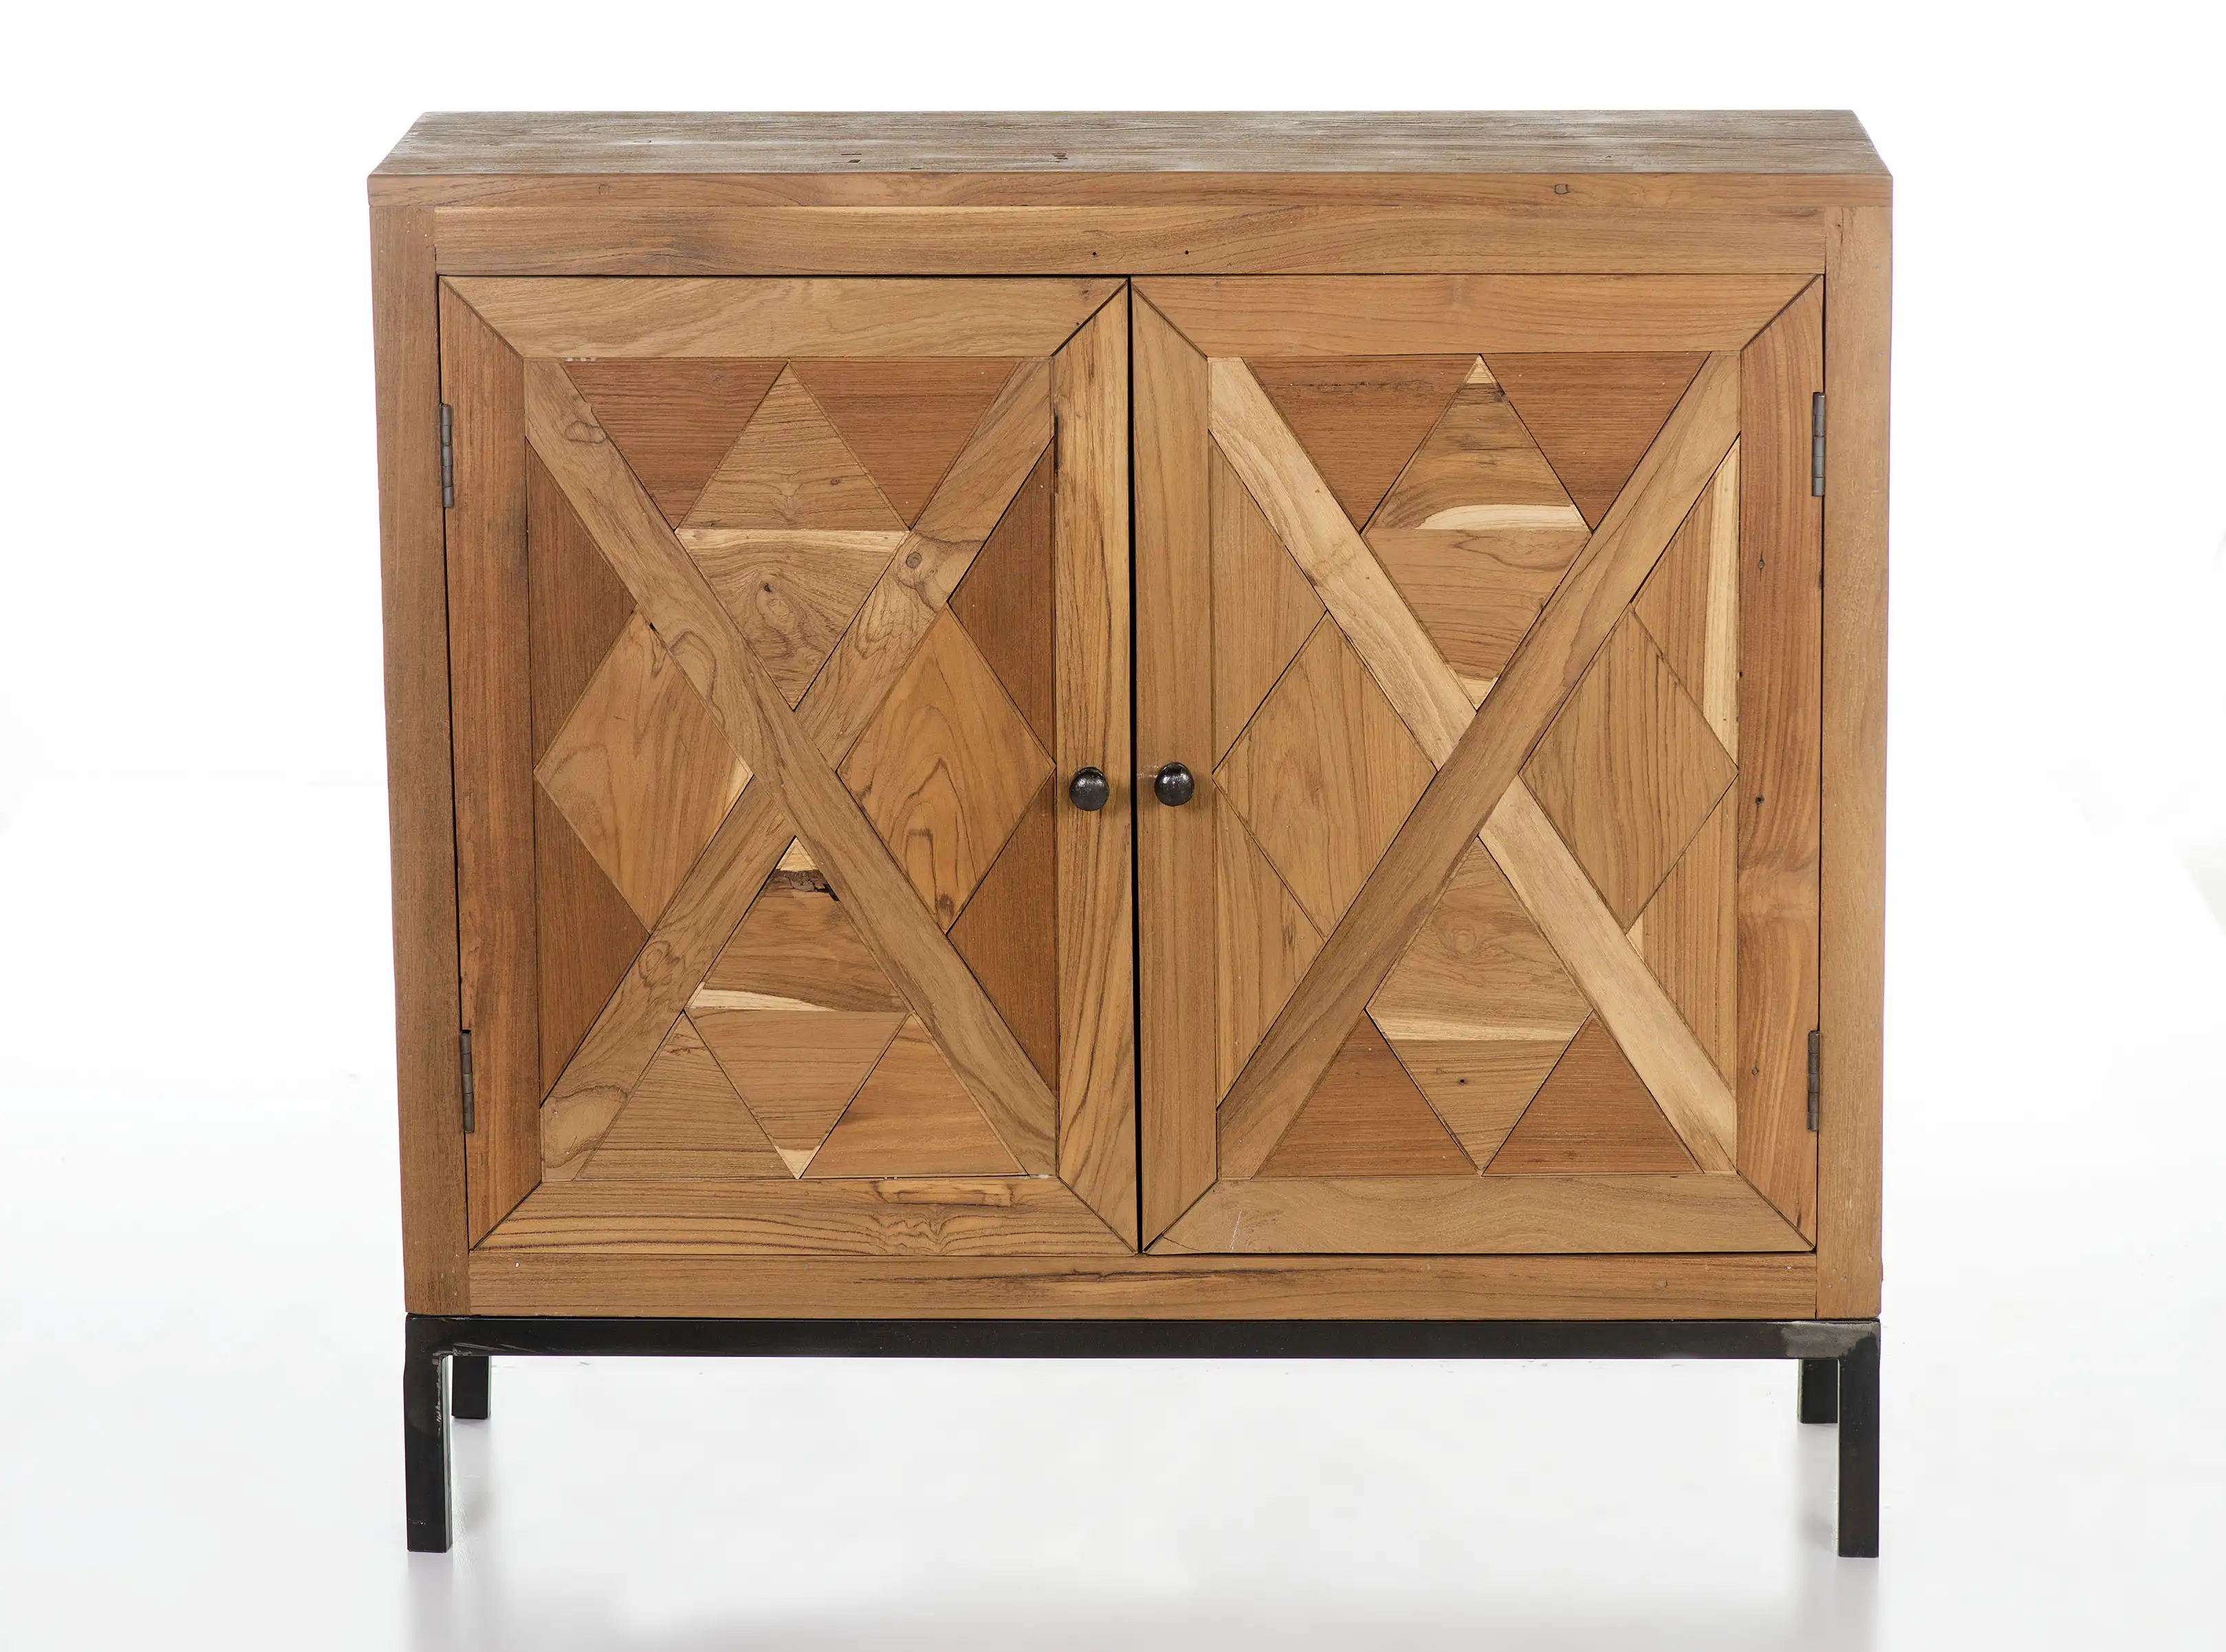 Parket Collection's Wooden Cabinet with 2 Doors - popular handicrafts